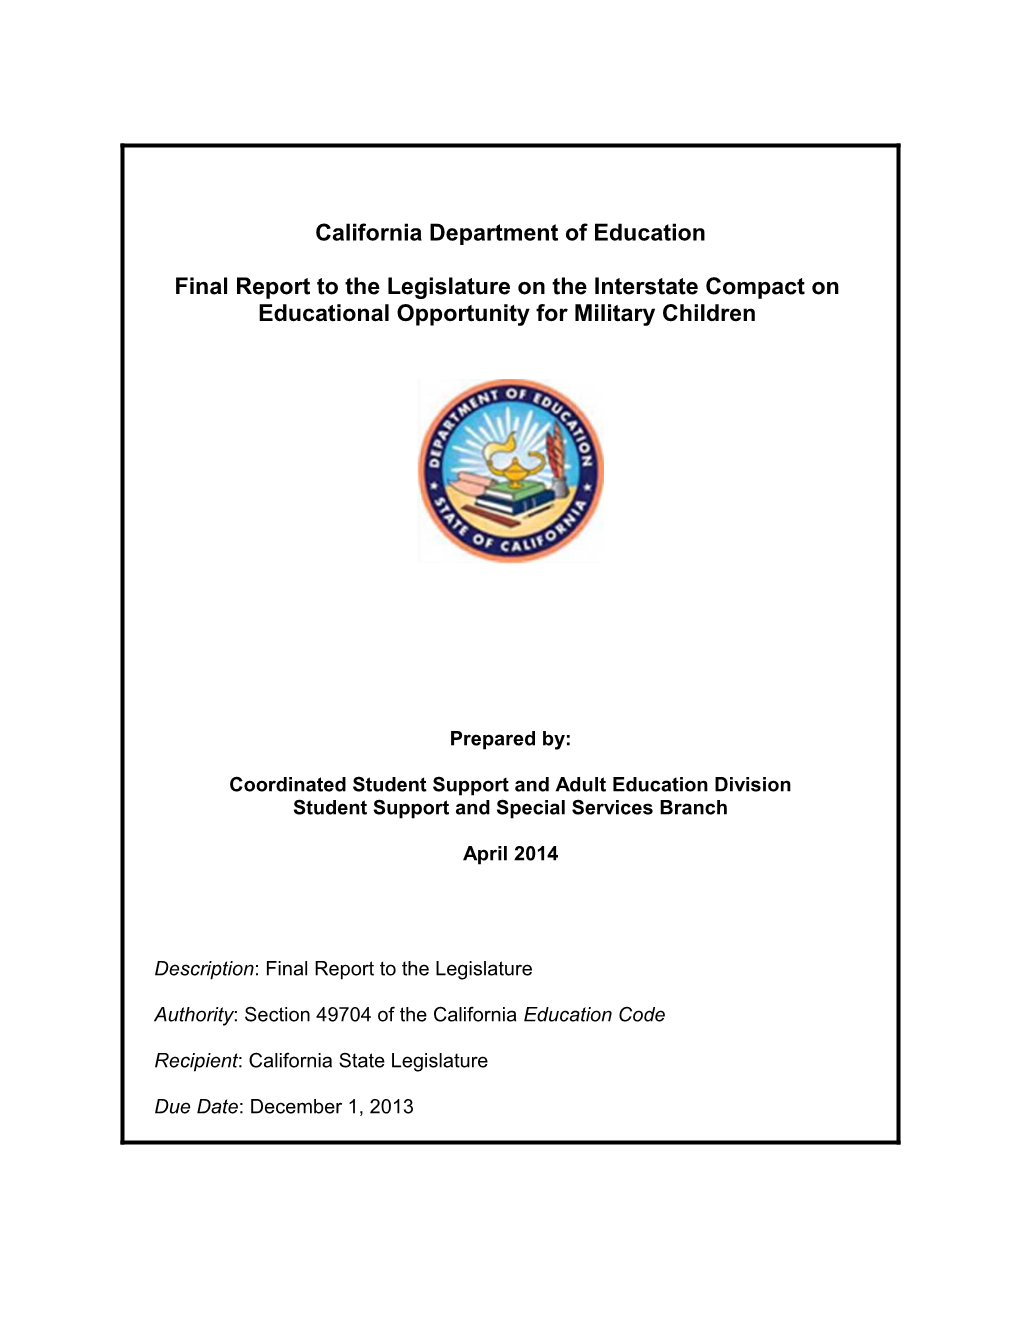 ICEOMC Final Report To The Legislature 2014 - Military Children (CA Dept Of Education)